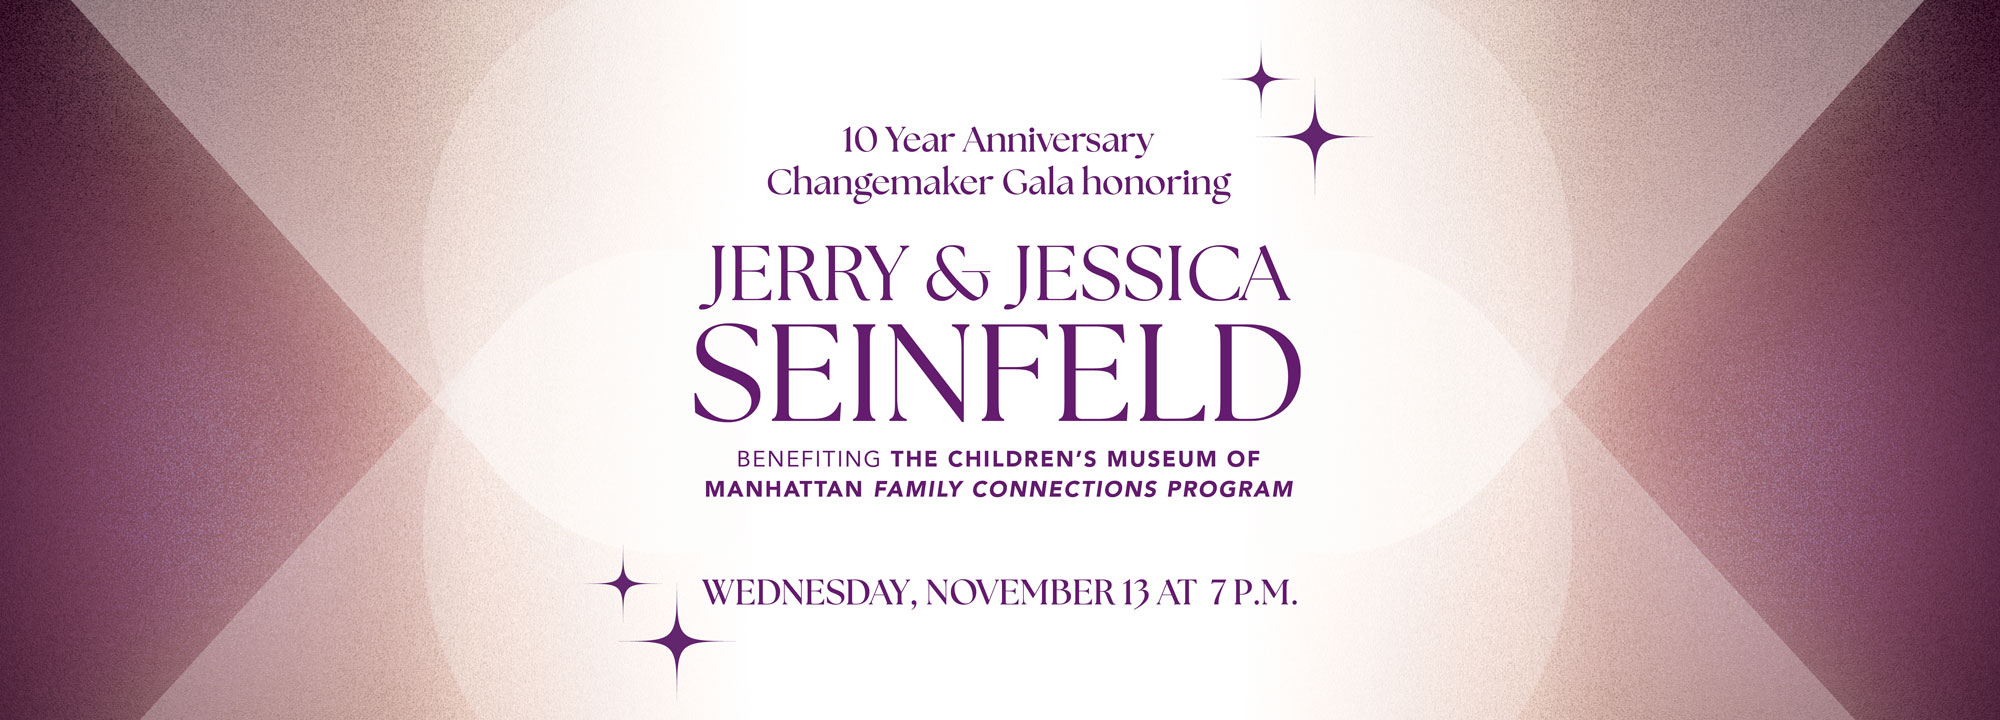 changemaker gala honoring Jerry Seinfeld and Jessica Seinfeld